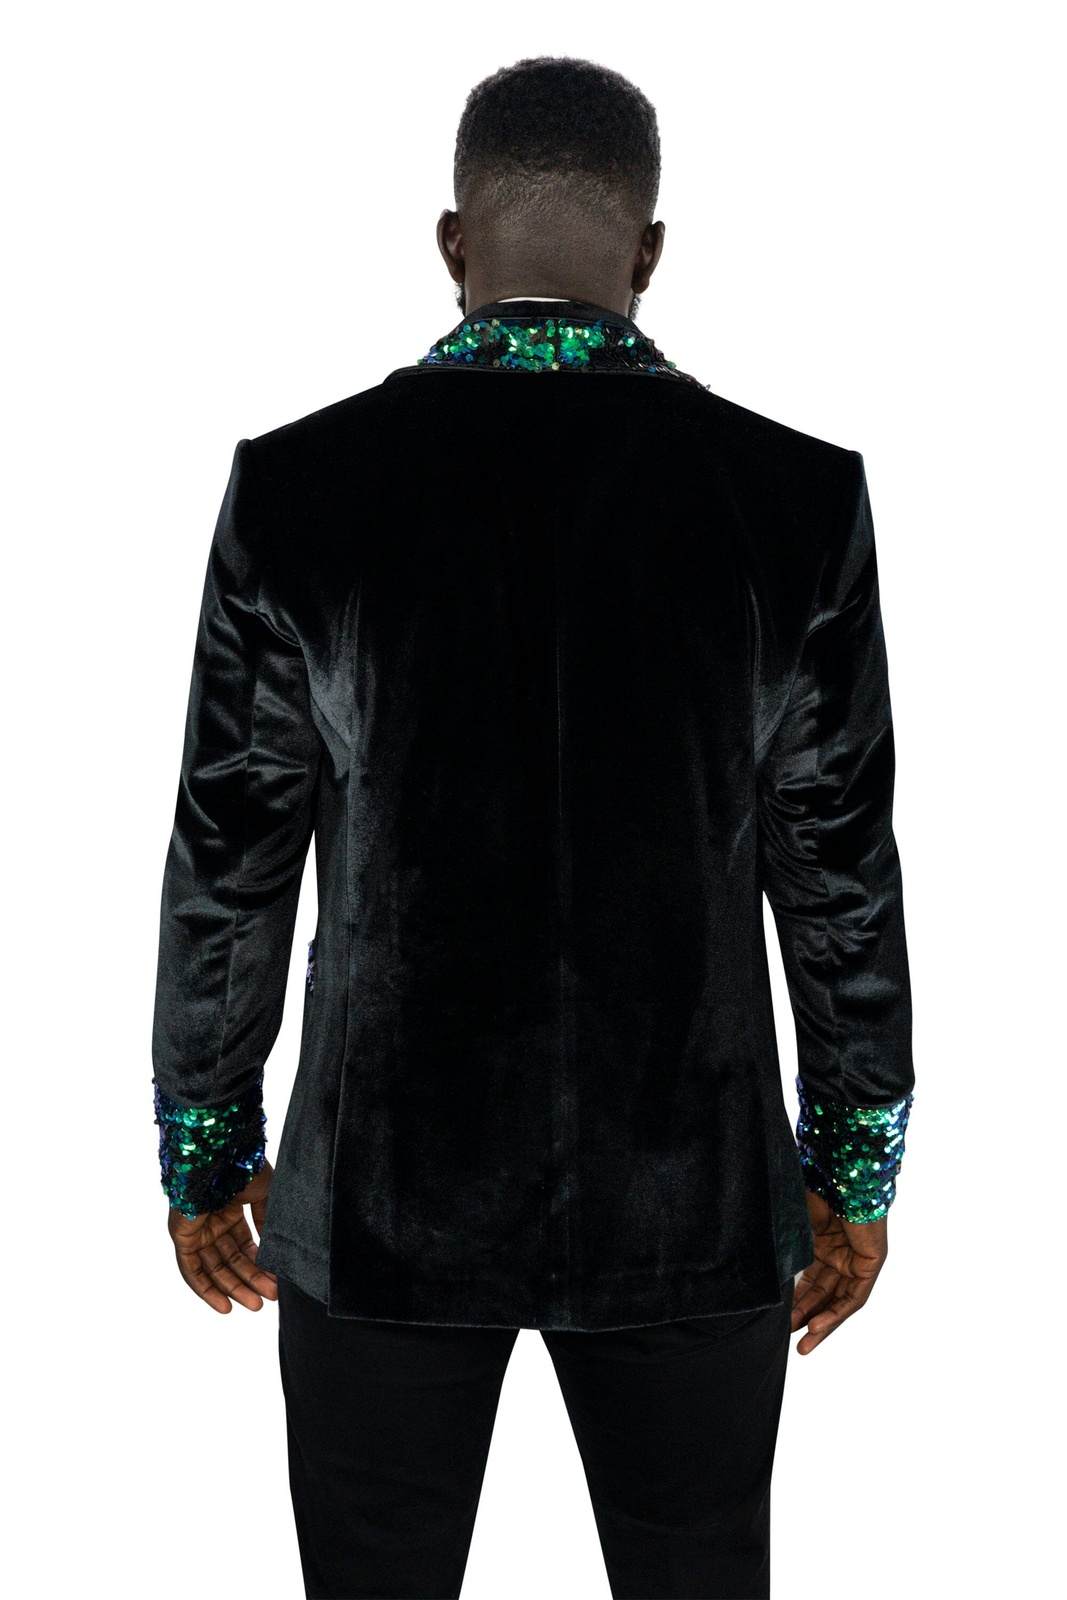 Mens Black Velvet Smoking Jacket with iridescent Green Sequins by Love Khaos Festival Jacket brand.